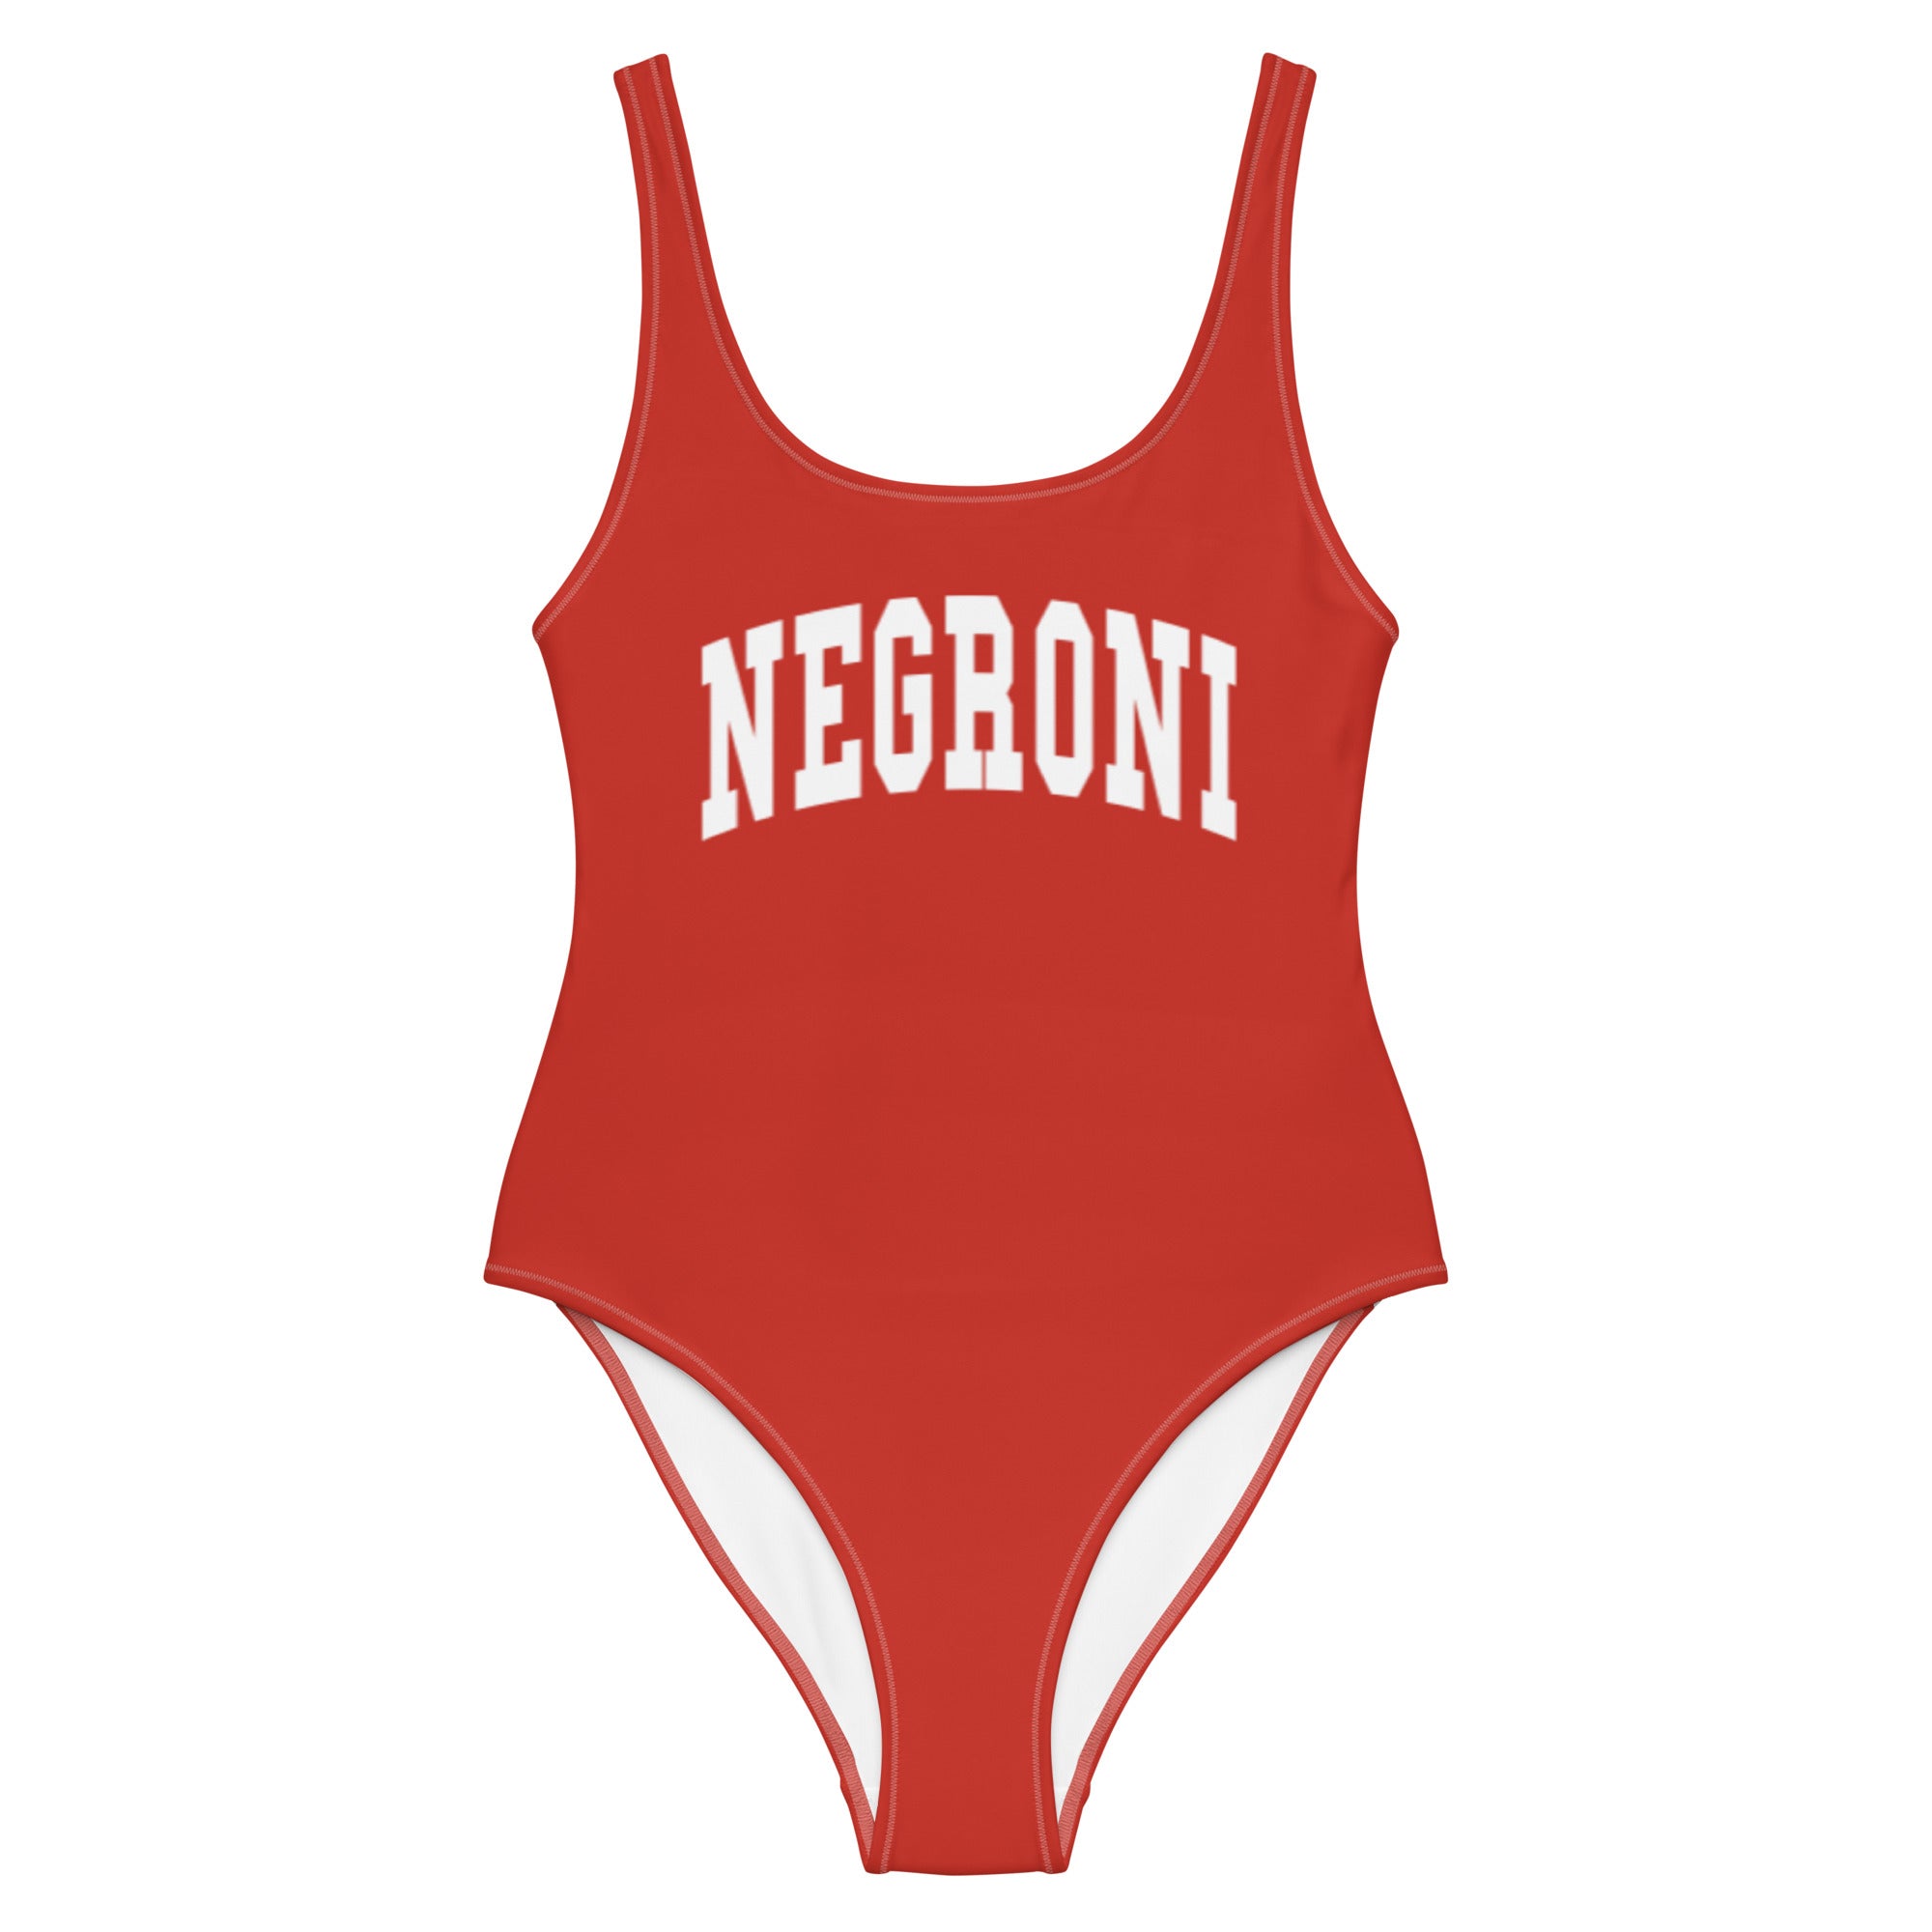 Negroni - Swimsuit - The Refined Spirit